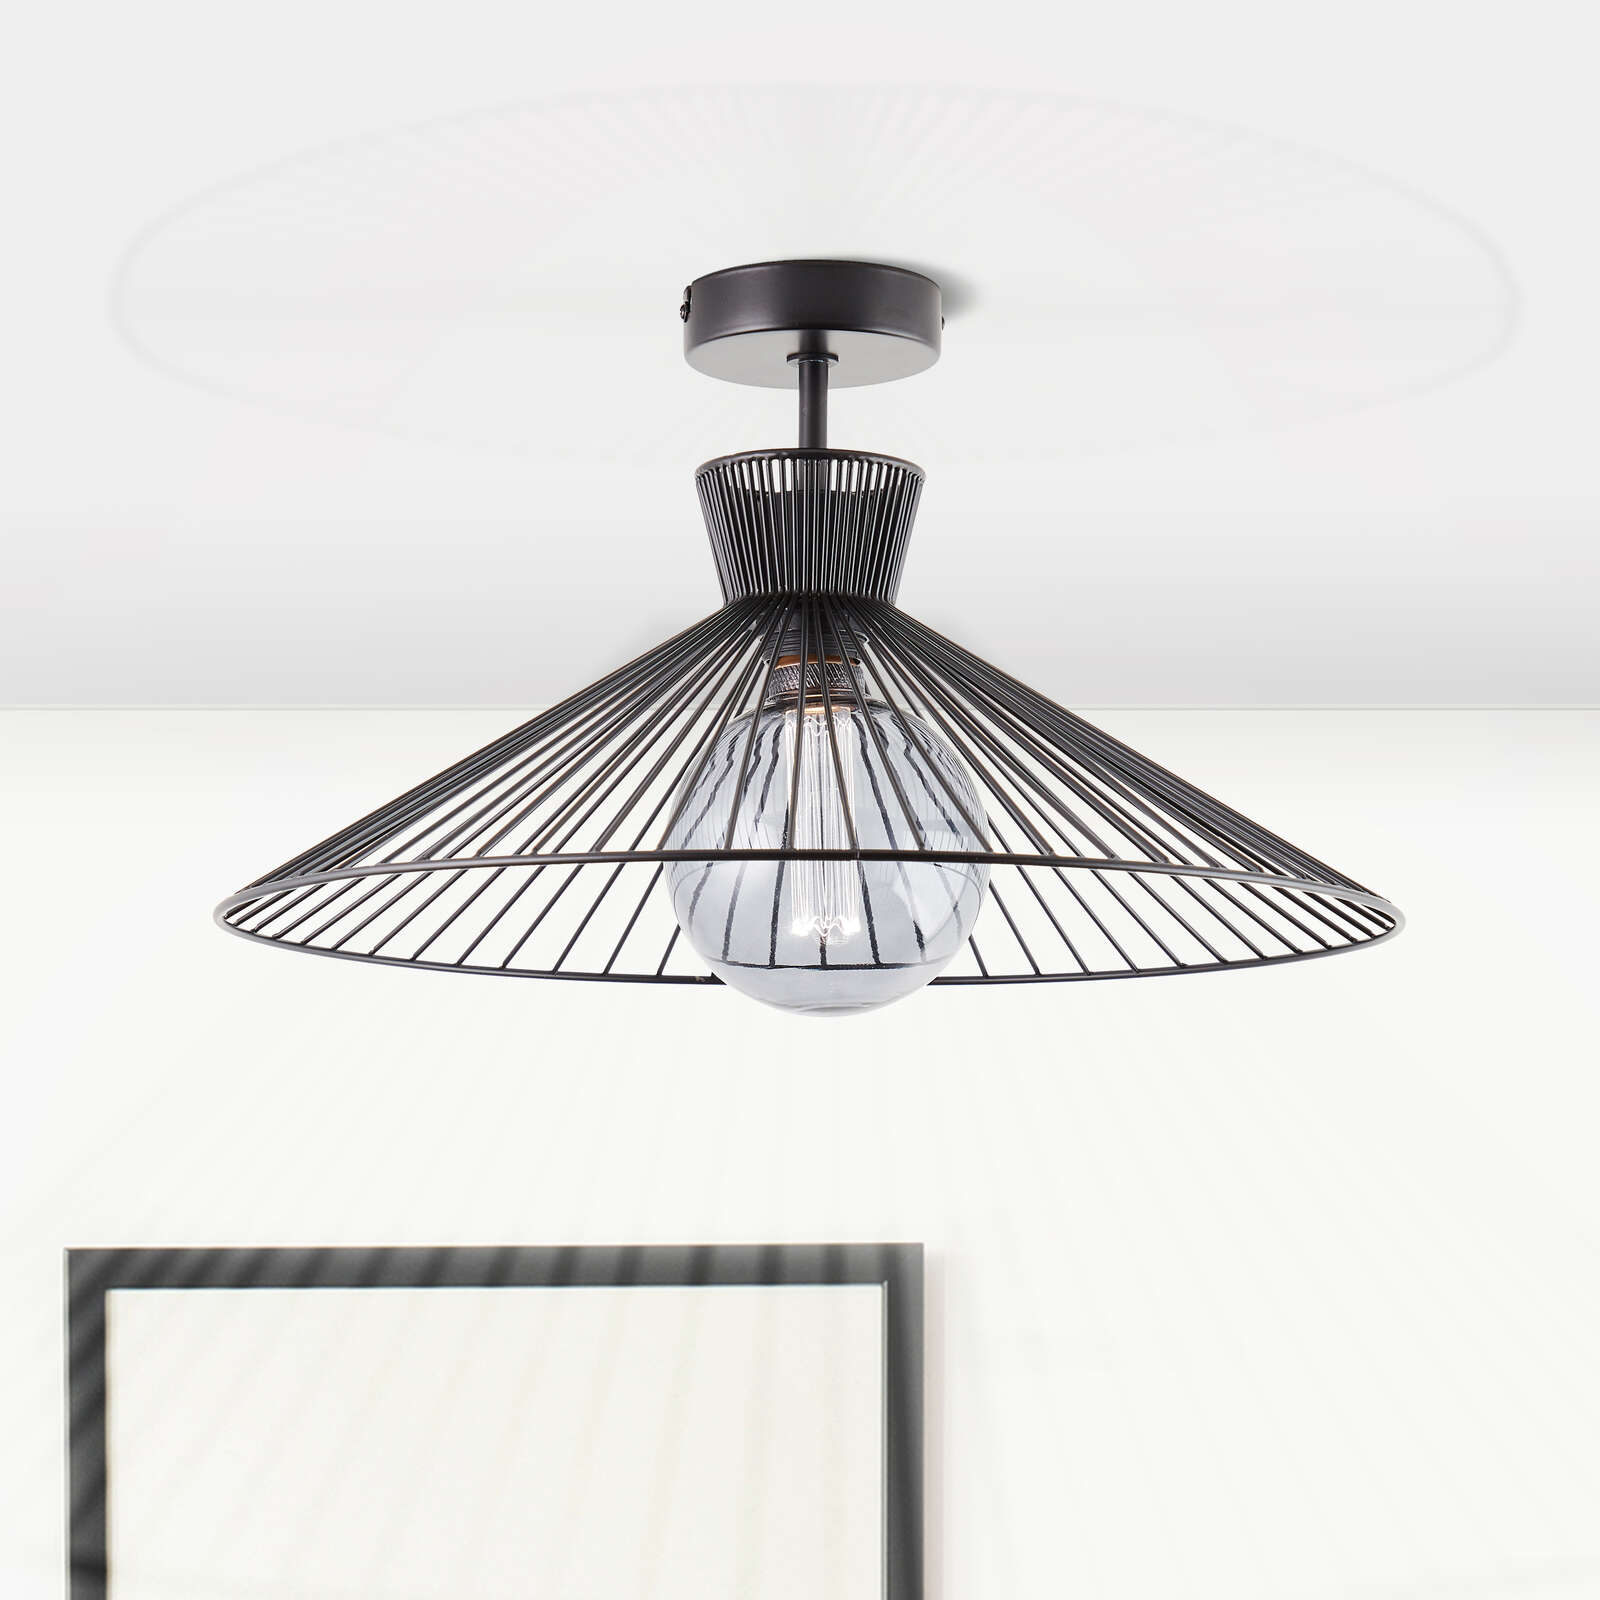             Metalen plafondlamp - Florentina - Zwart
        